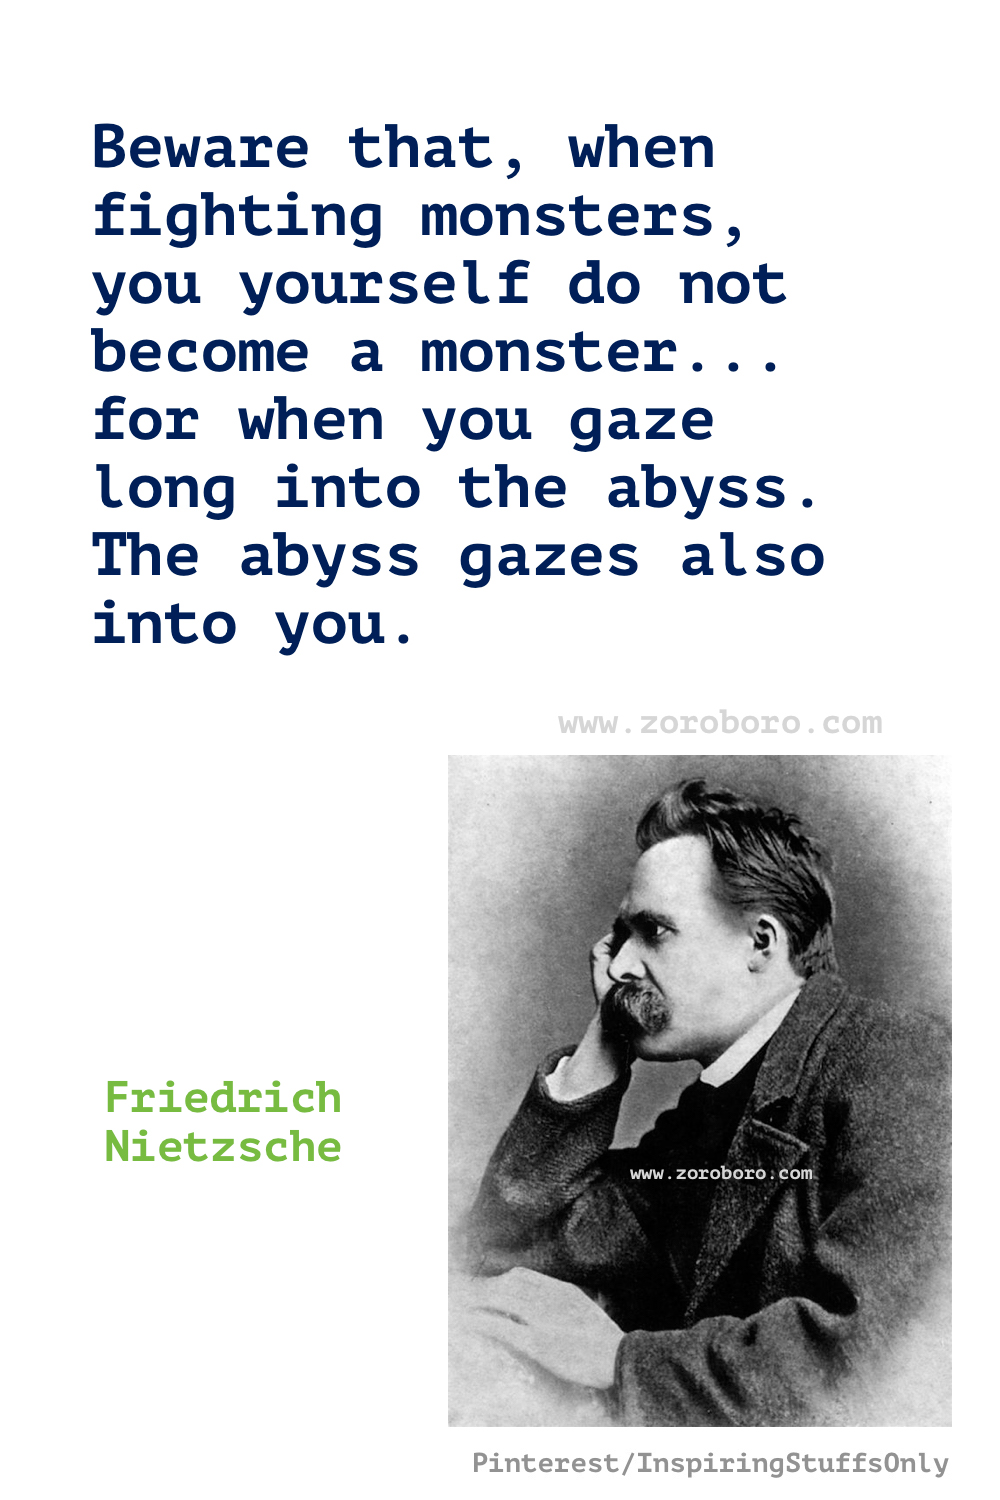 Friedrich Nietzsche Quotes. Friedrich Nietzsche Philosophy, Friedrich Nietzsche Books Quotes, Friedrich Nietzsche - Thus Spoke Zarathustra Quotes. Friedrich Nietzsche